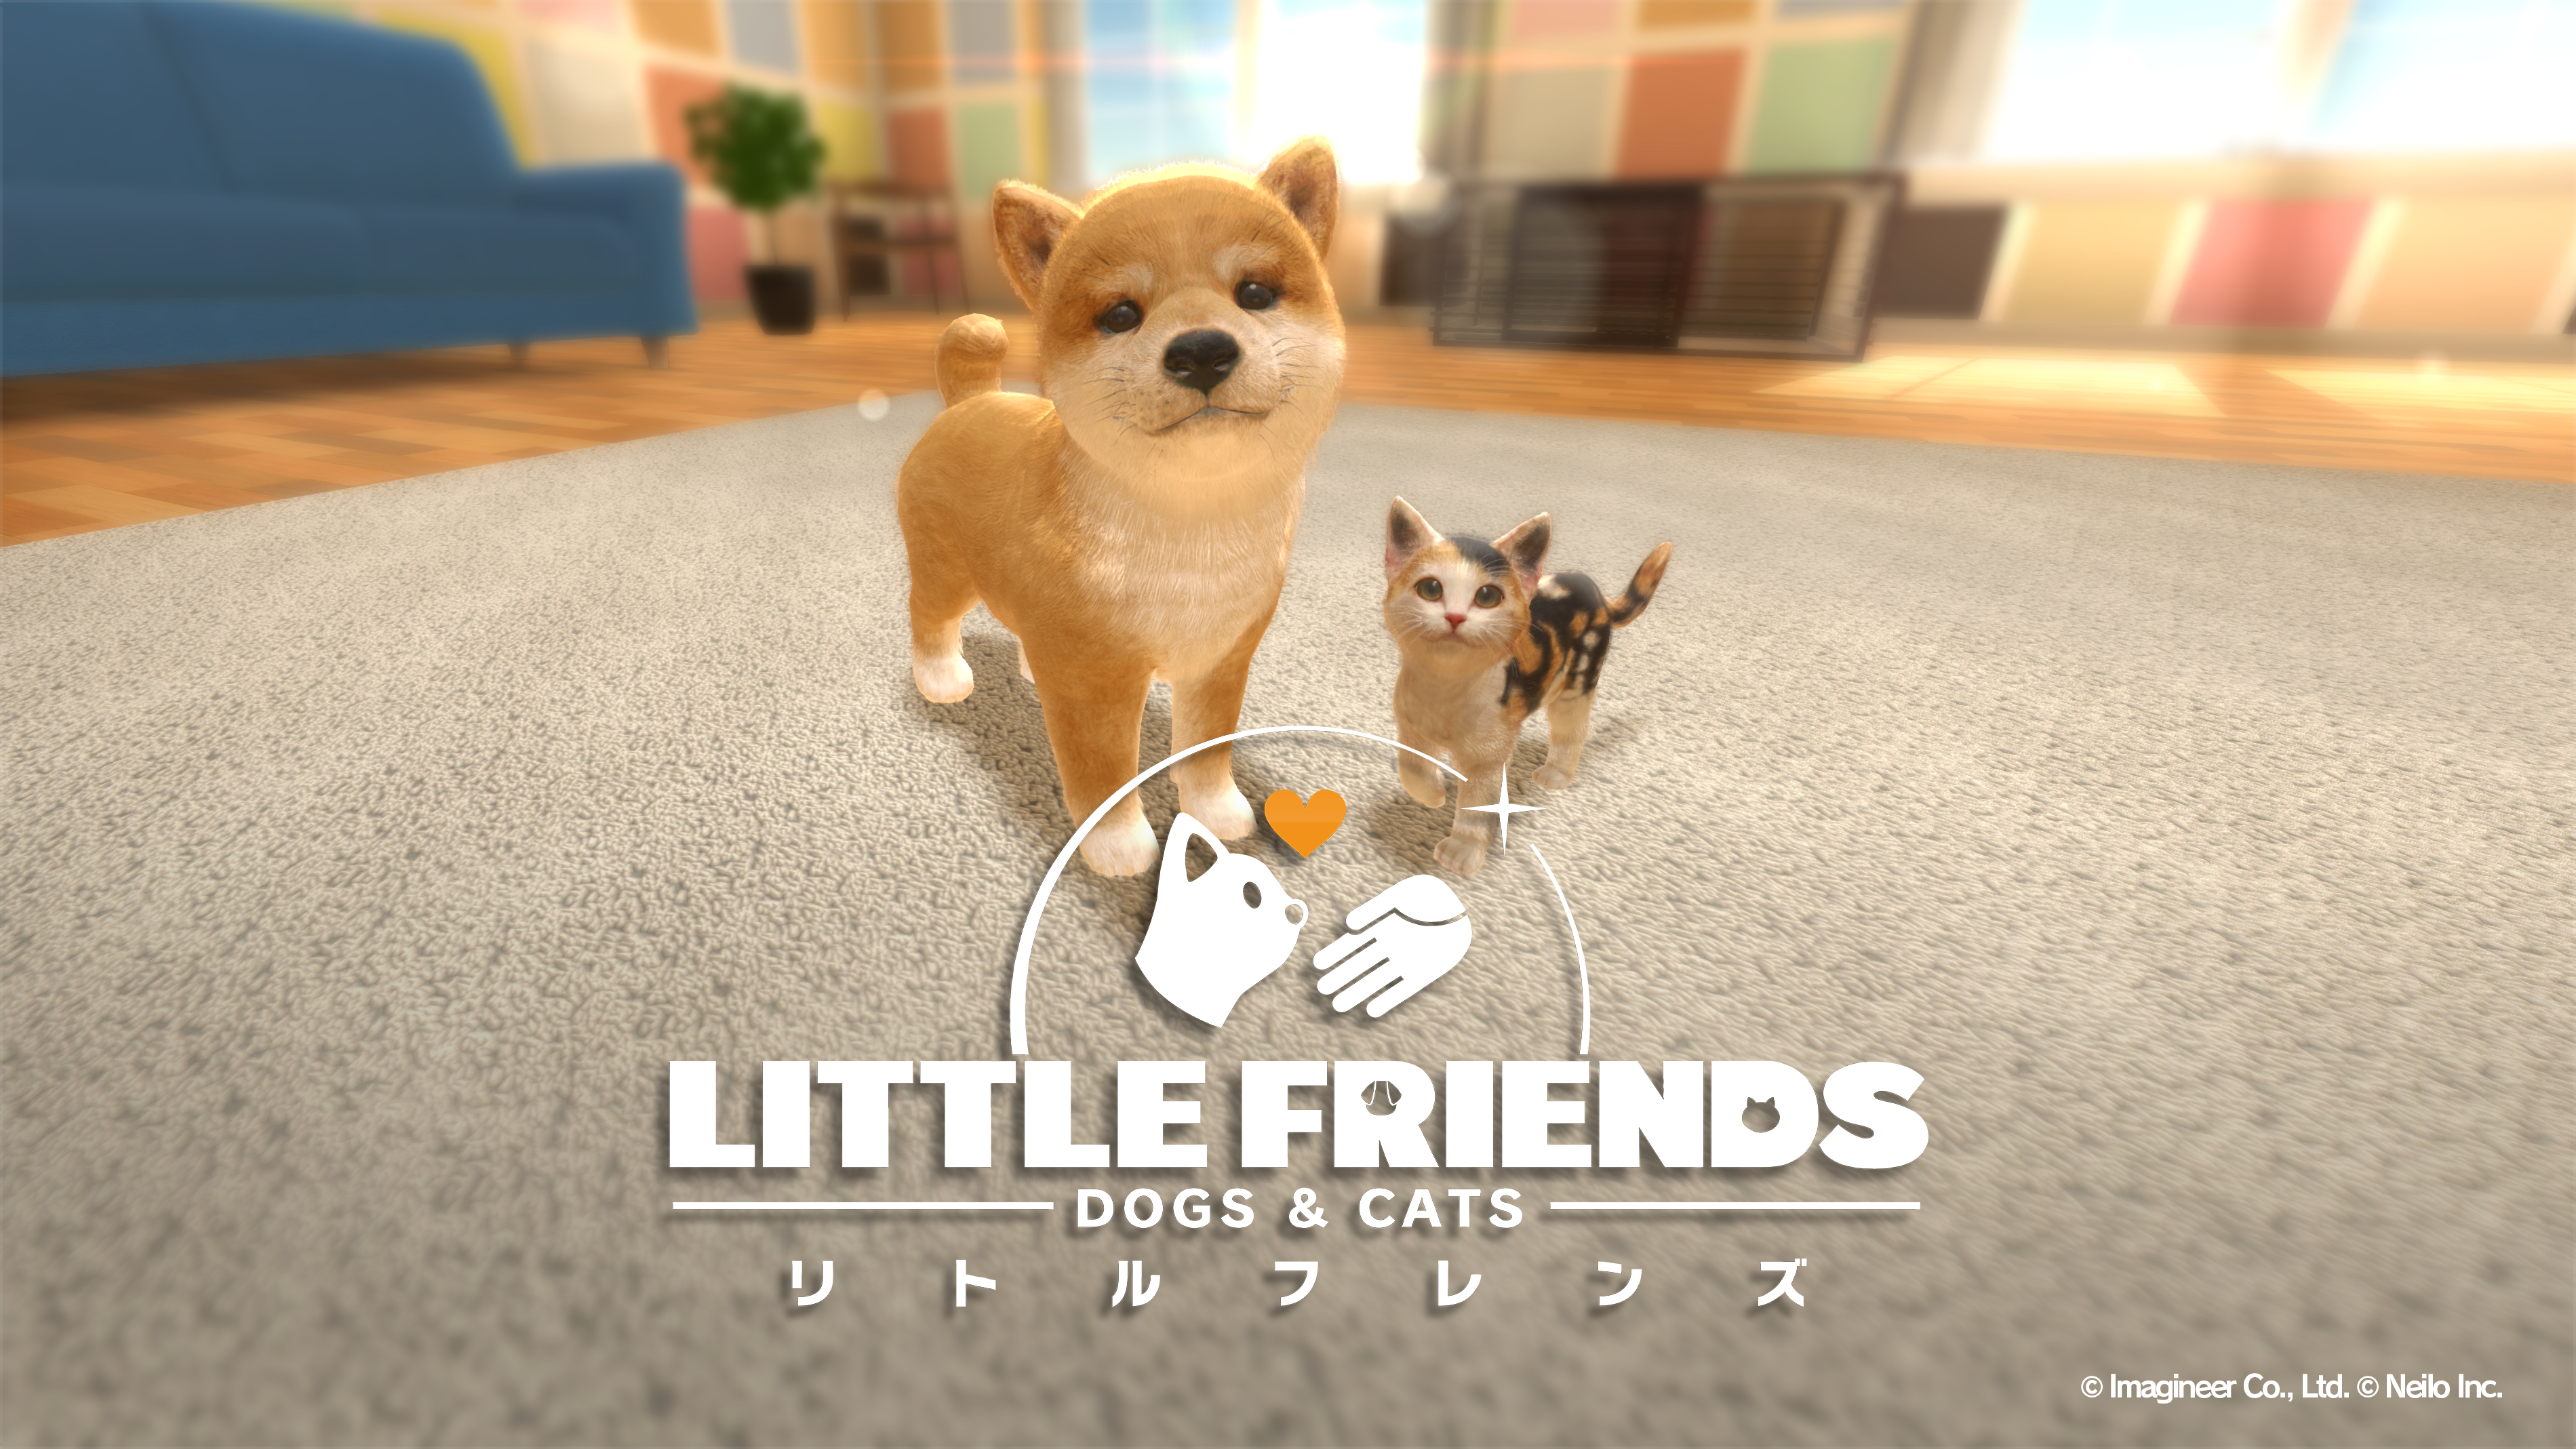 LITTLE FRIENDS –DOGS & CATS